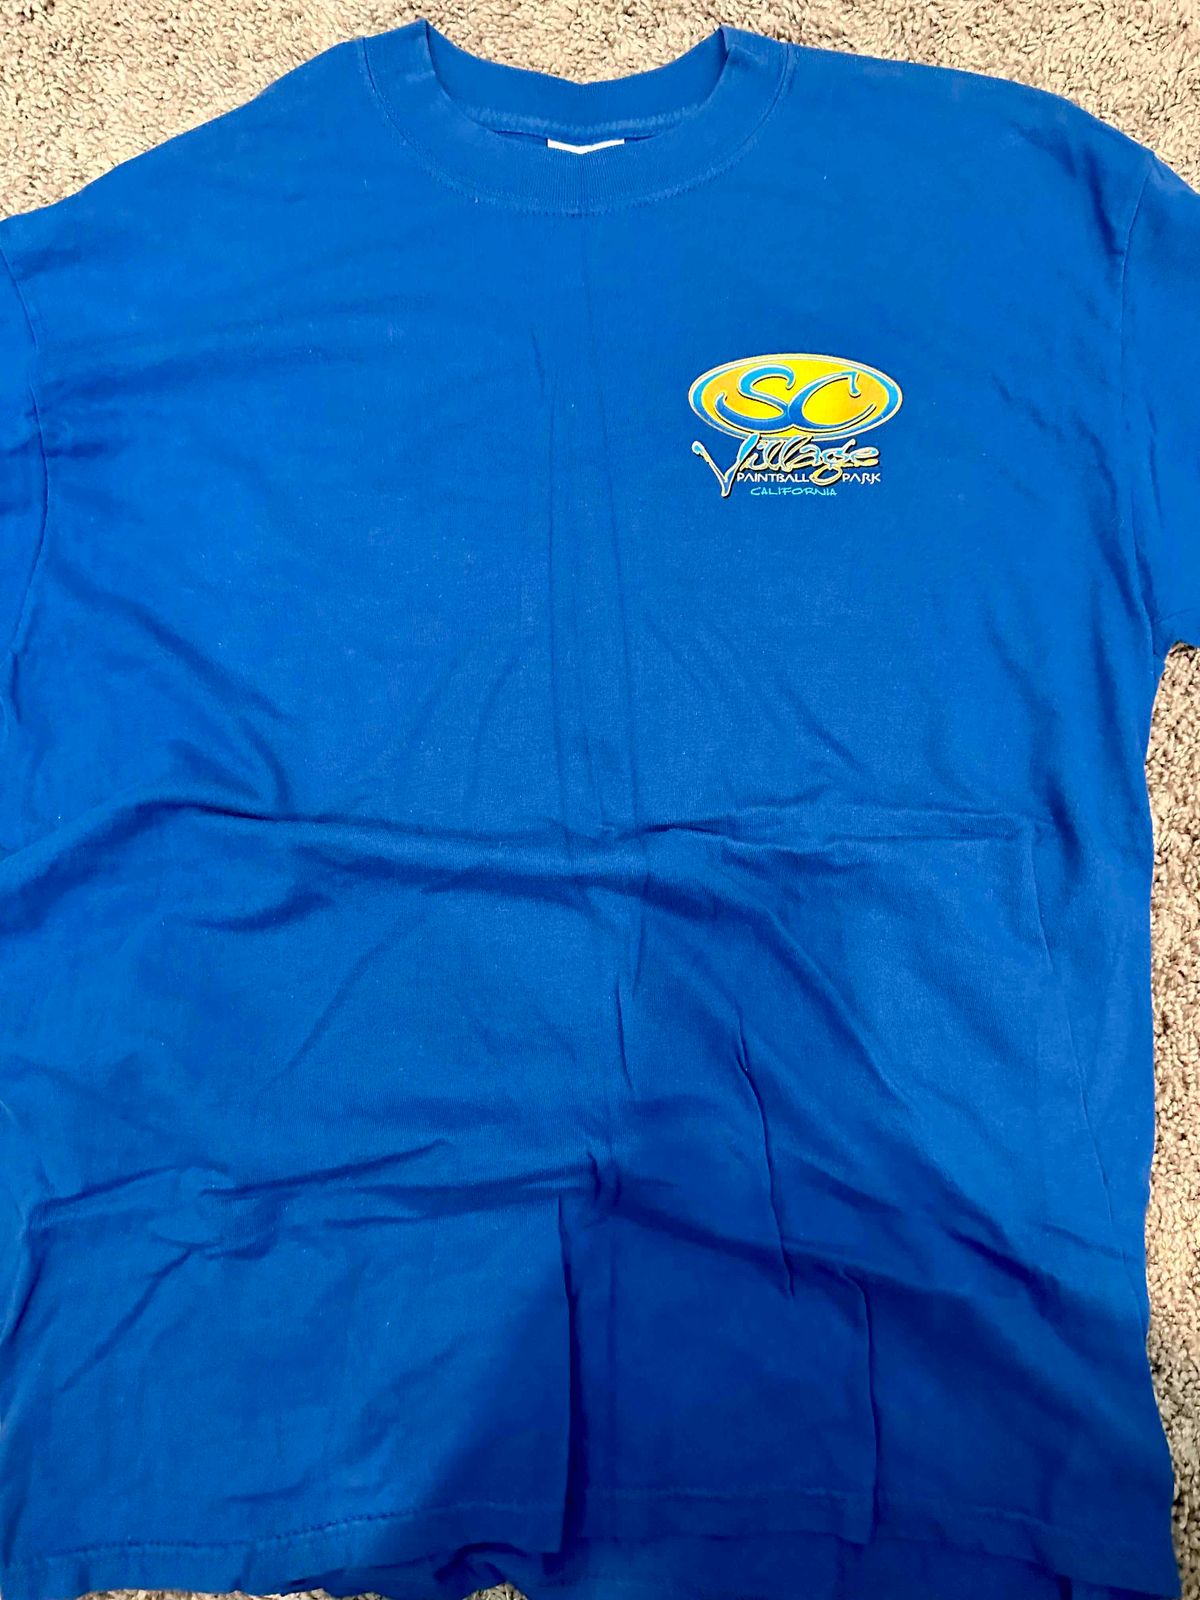 OG - SC village Shirt - XL